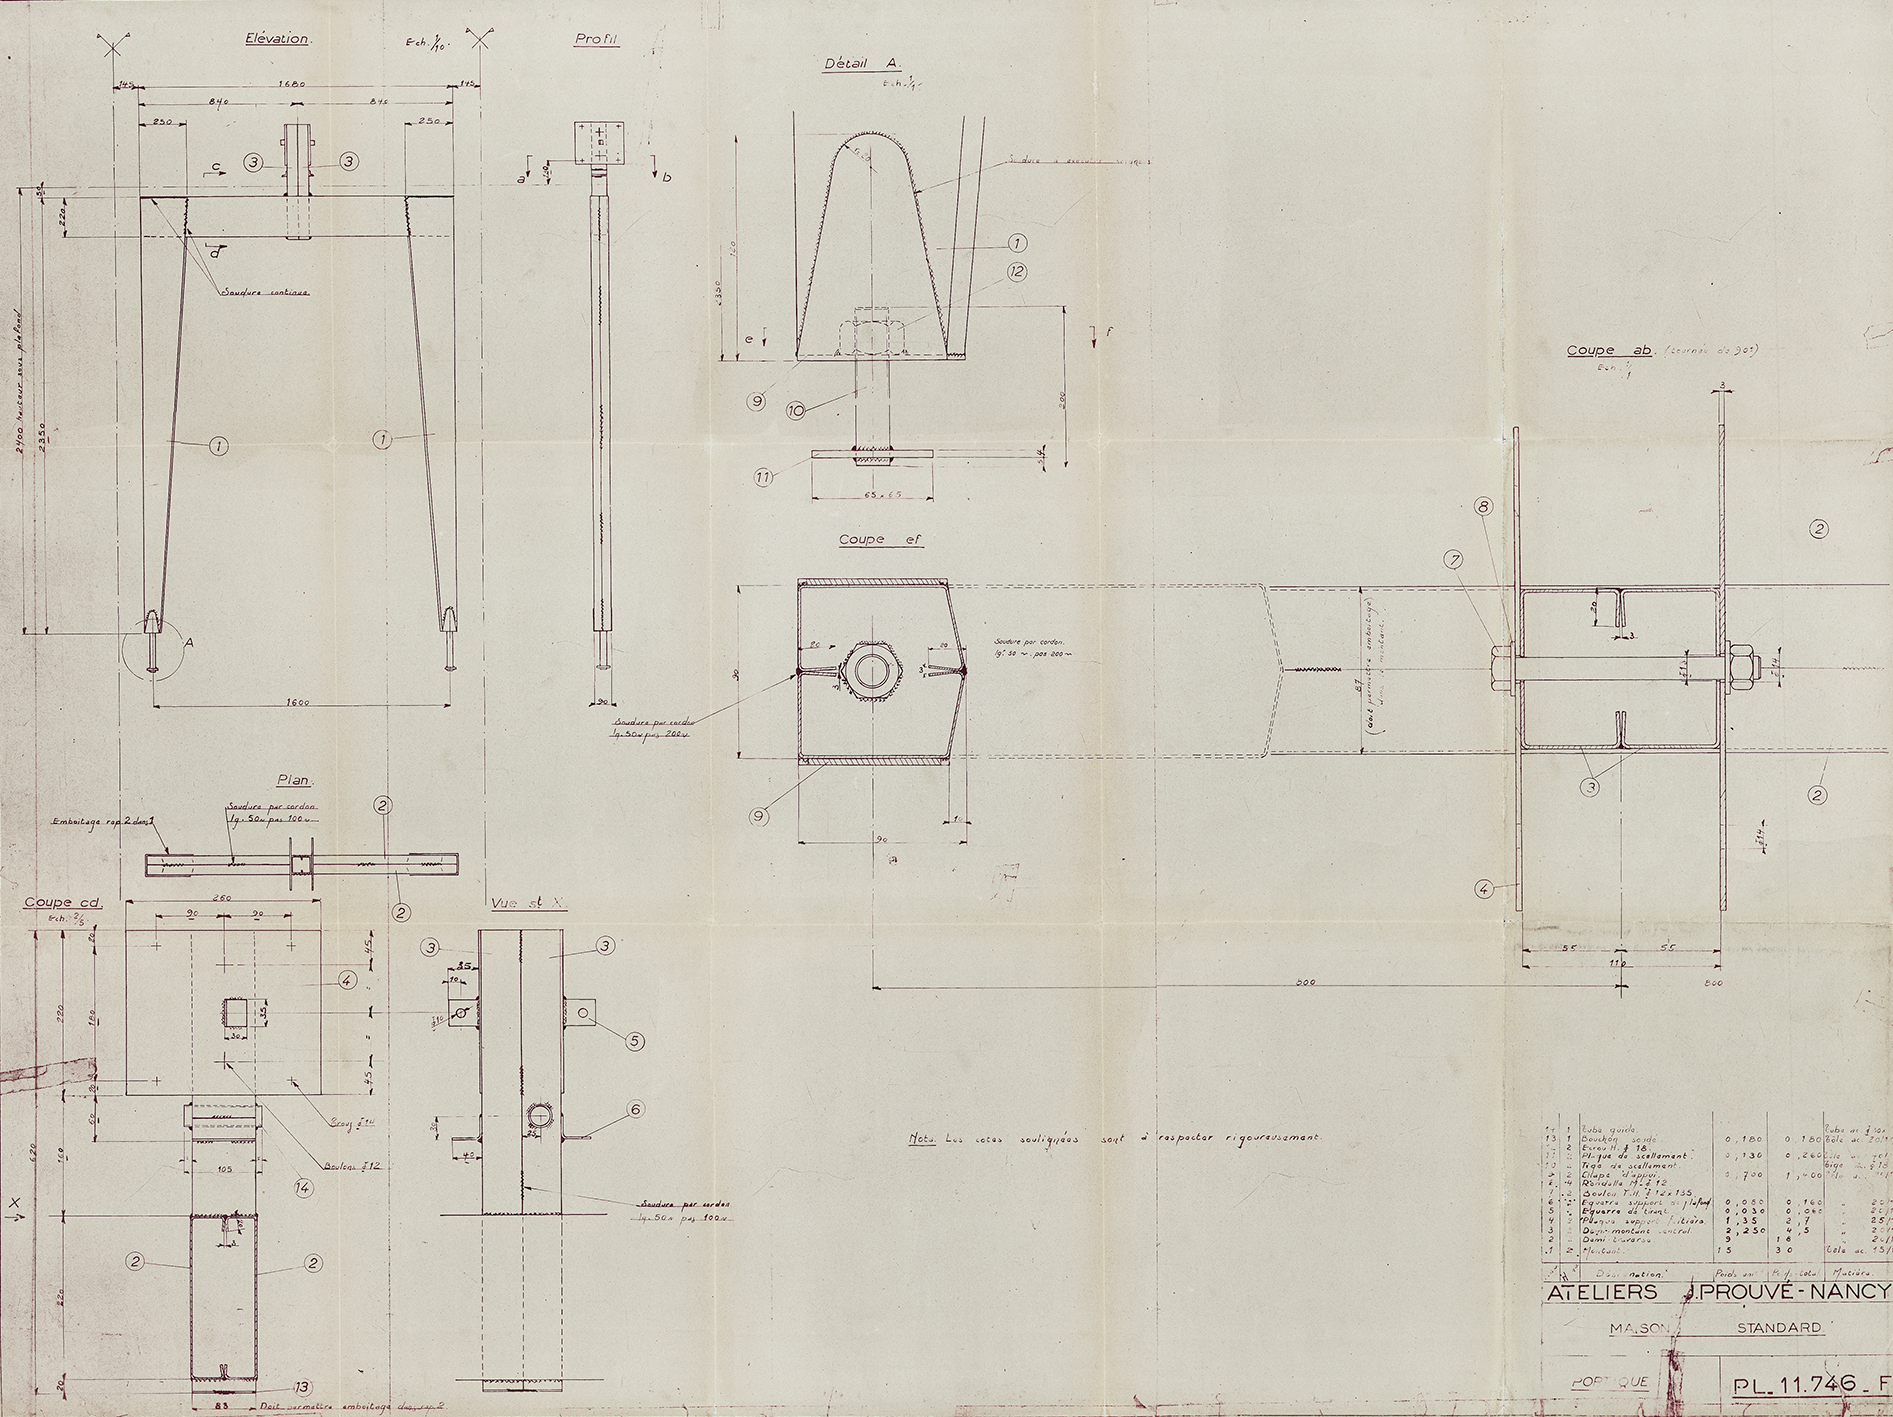 Ateliers Jean Prouvé. “Axial portal frame. Standard House”, plan no. 11.746, September 1948.